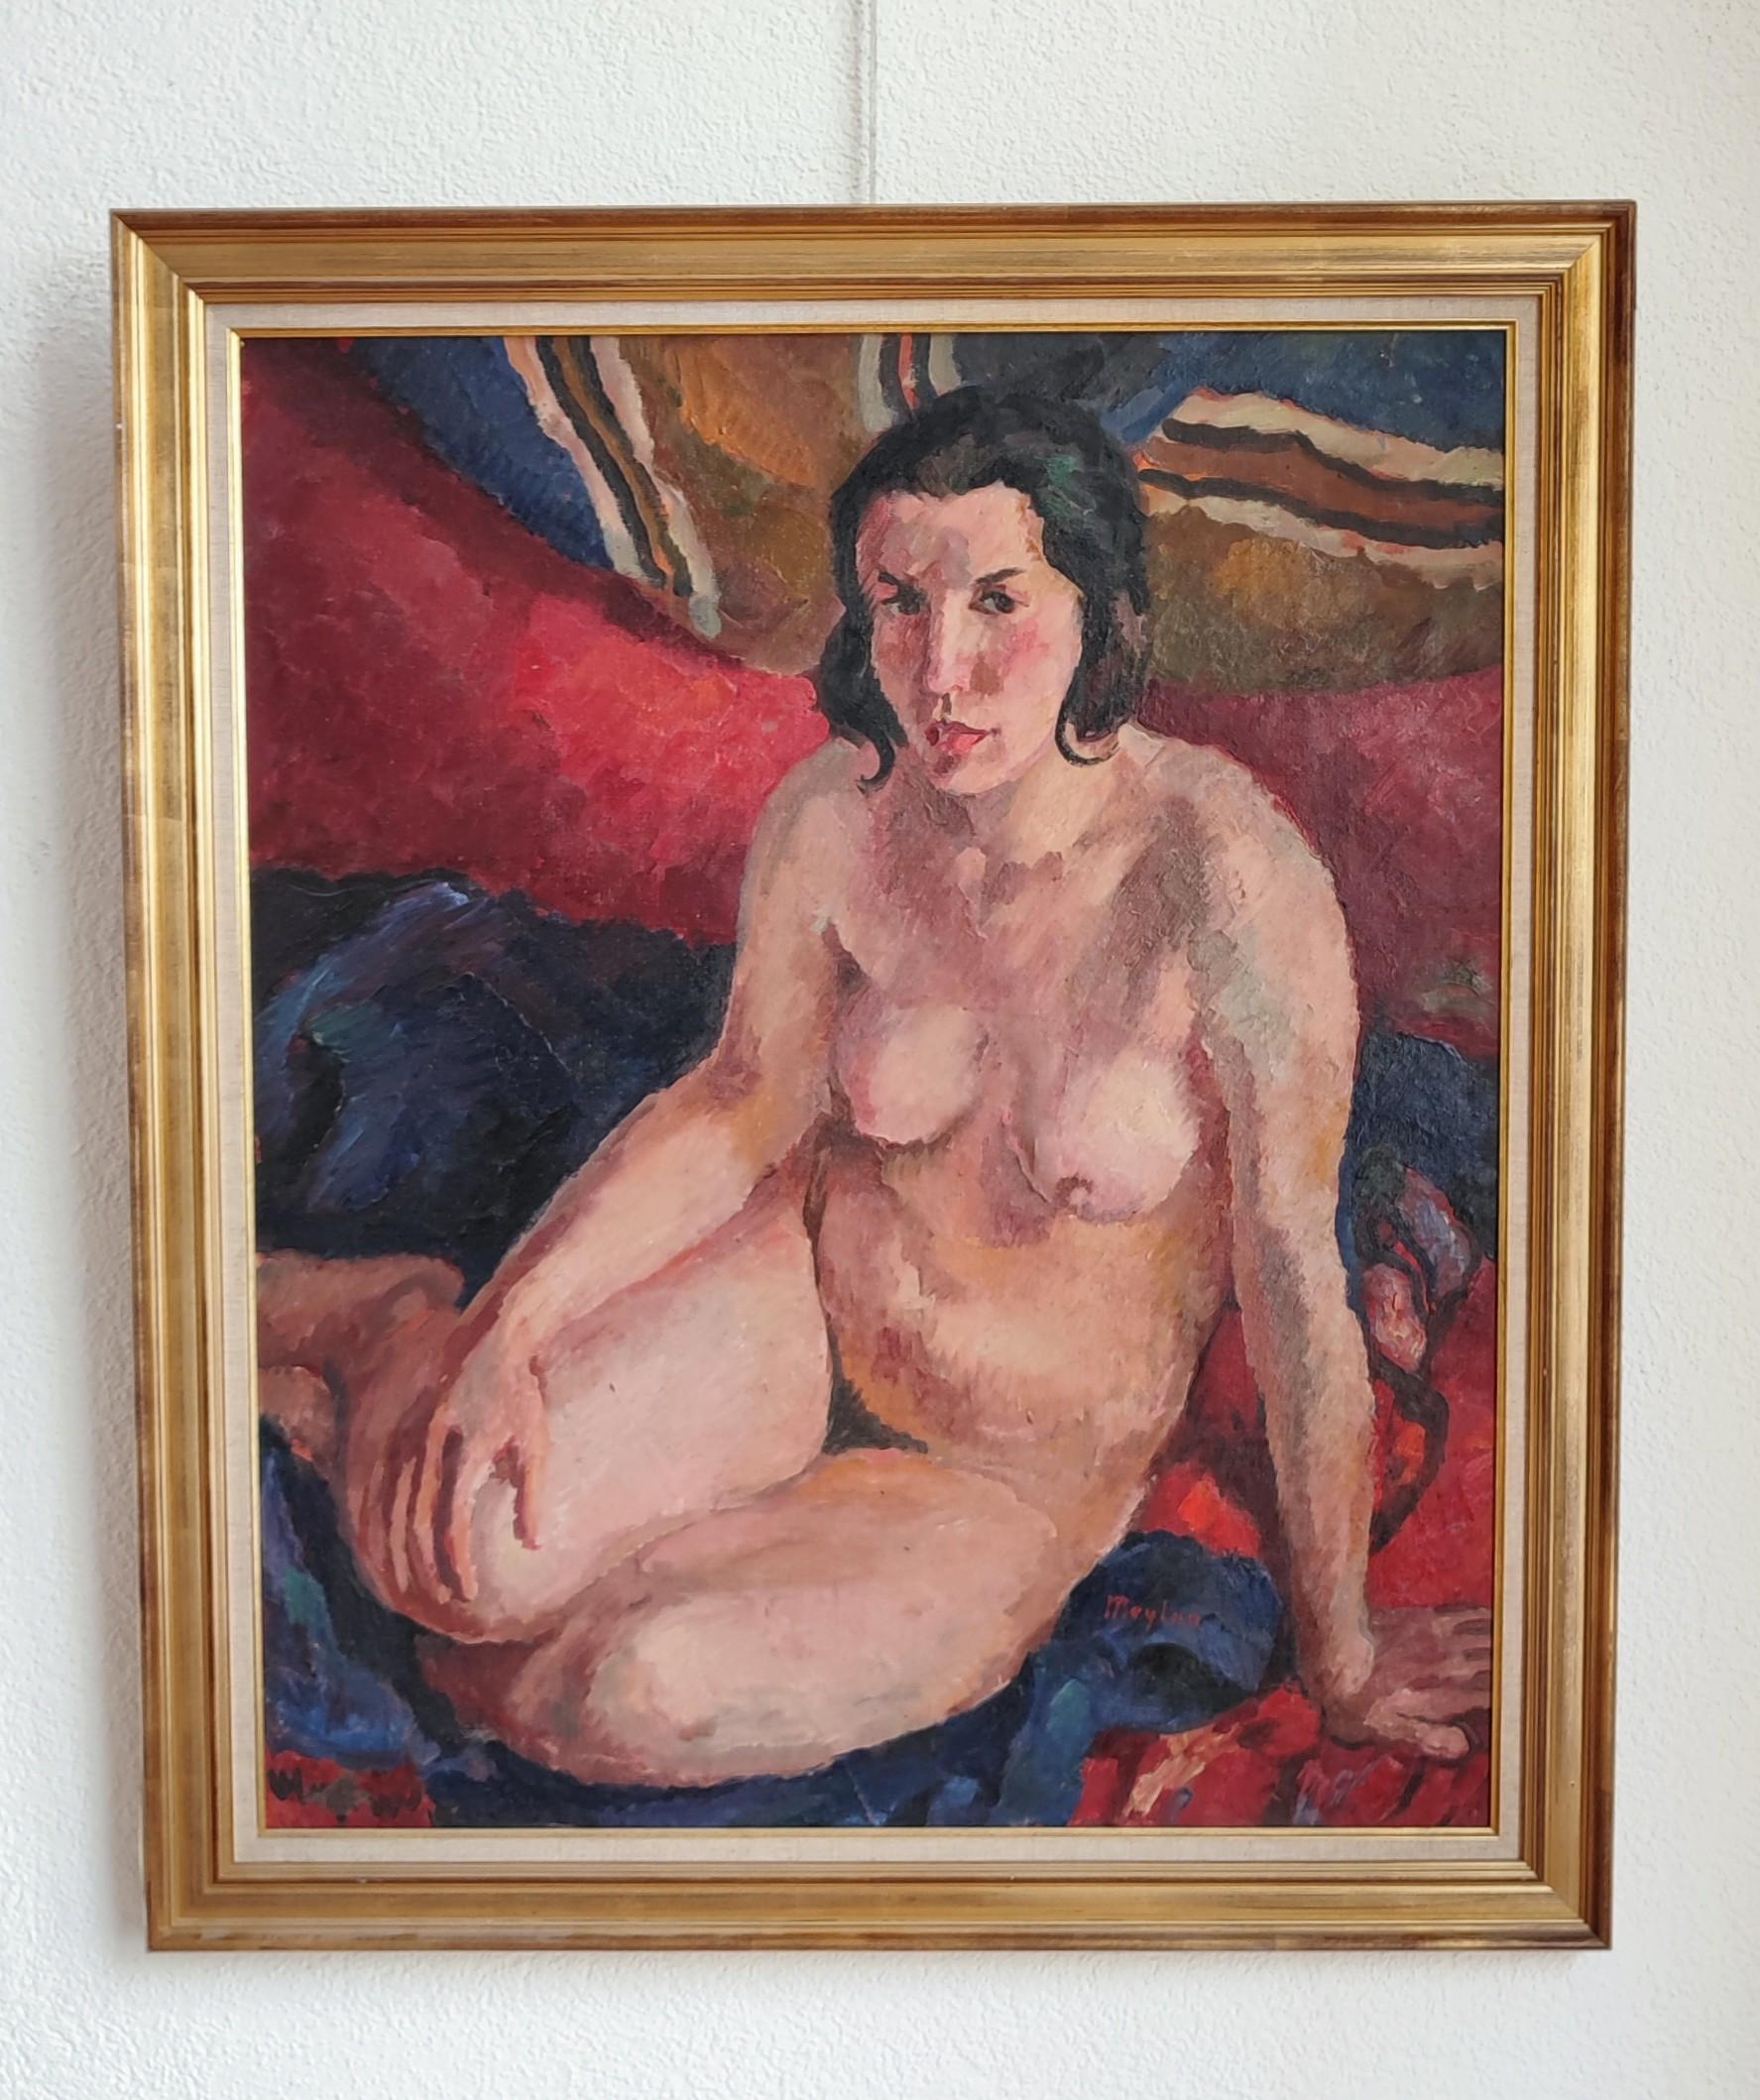 Woman posing nude - Painting by Henry Meylan